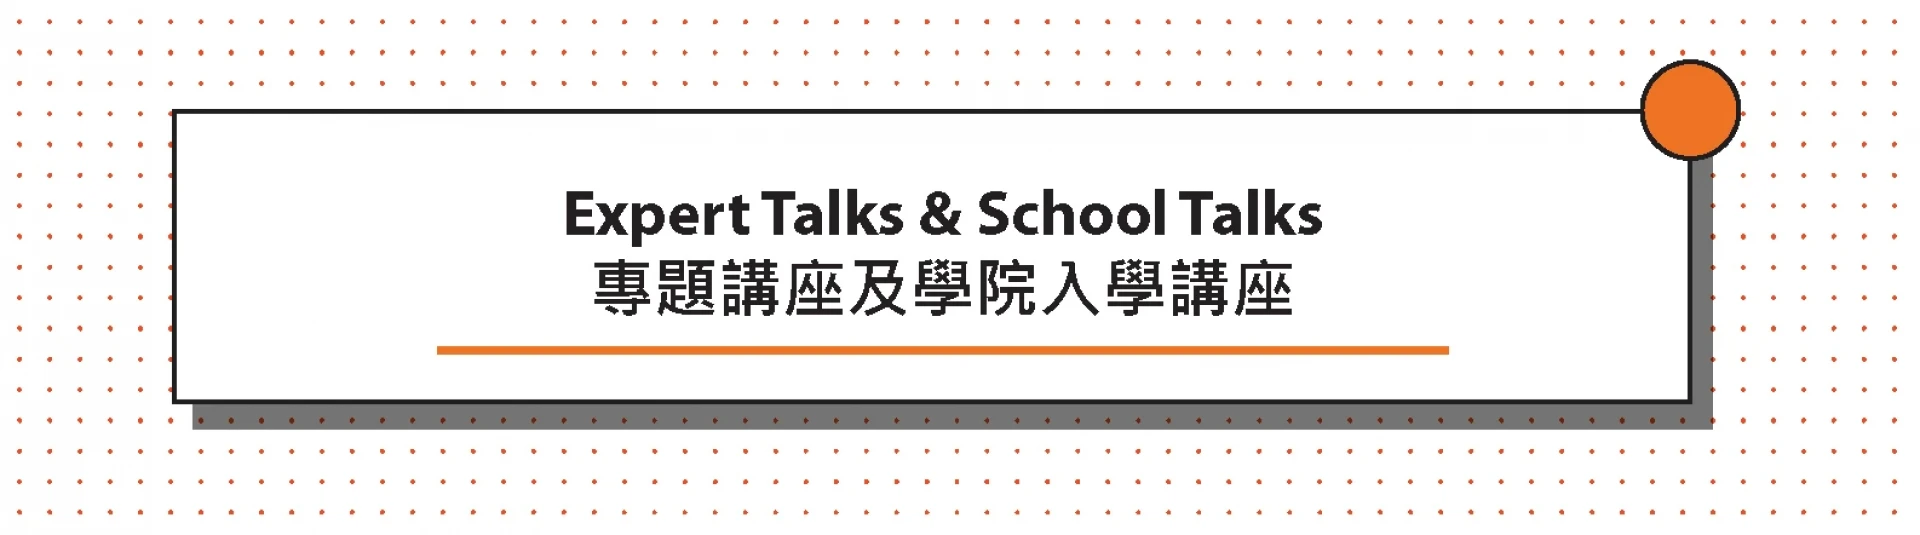 Expert Talks & School Talks